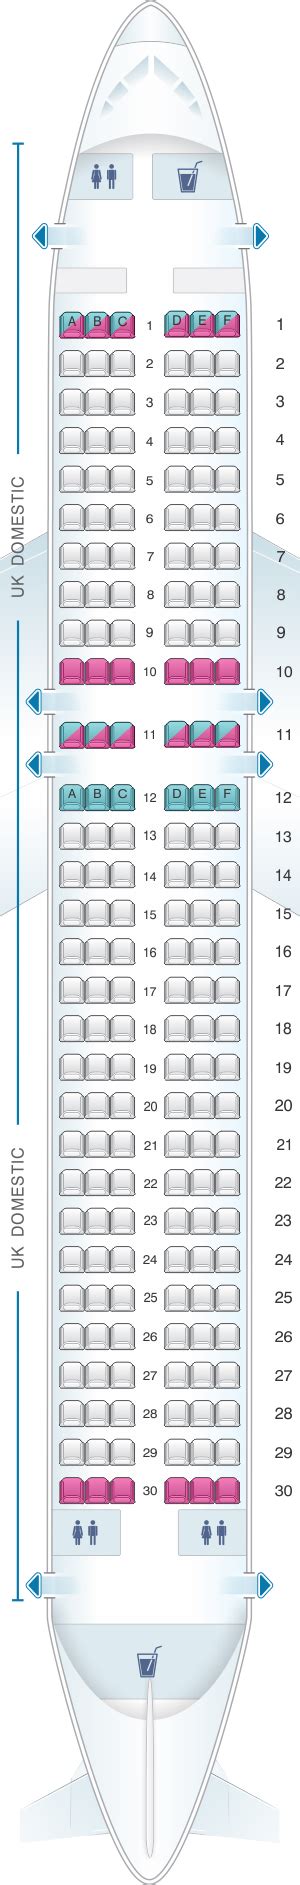 Seat Map British Airways Airbus A320 Domestic Layout Seatmaestro